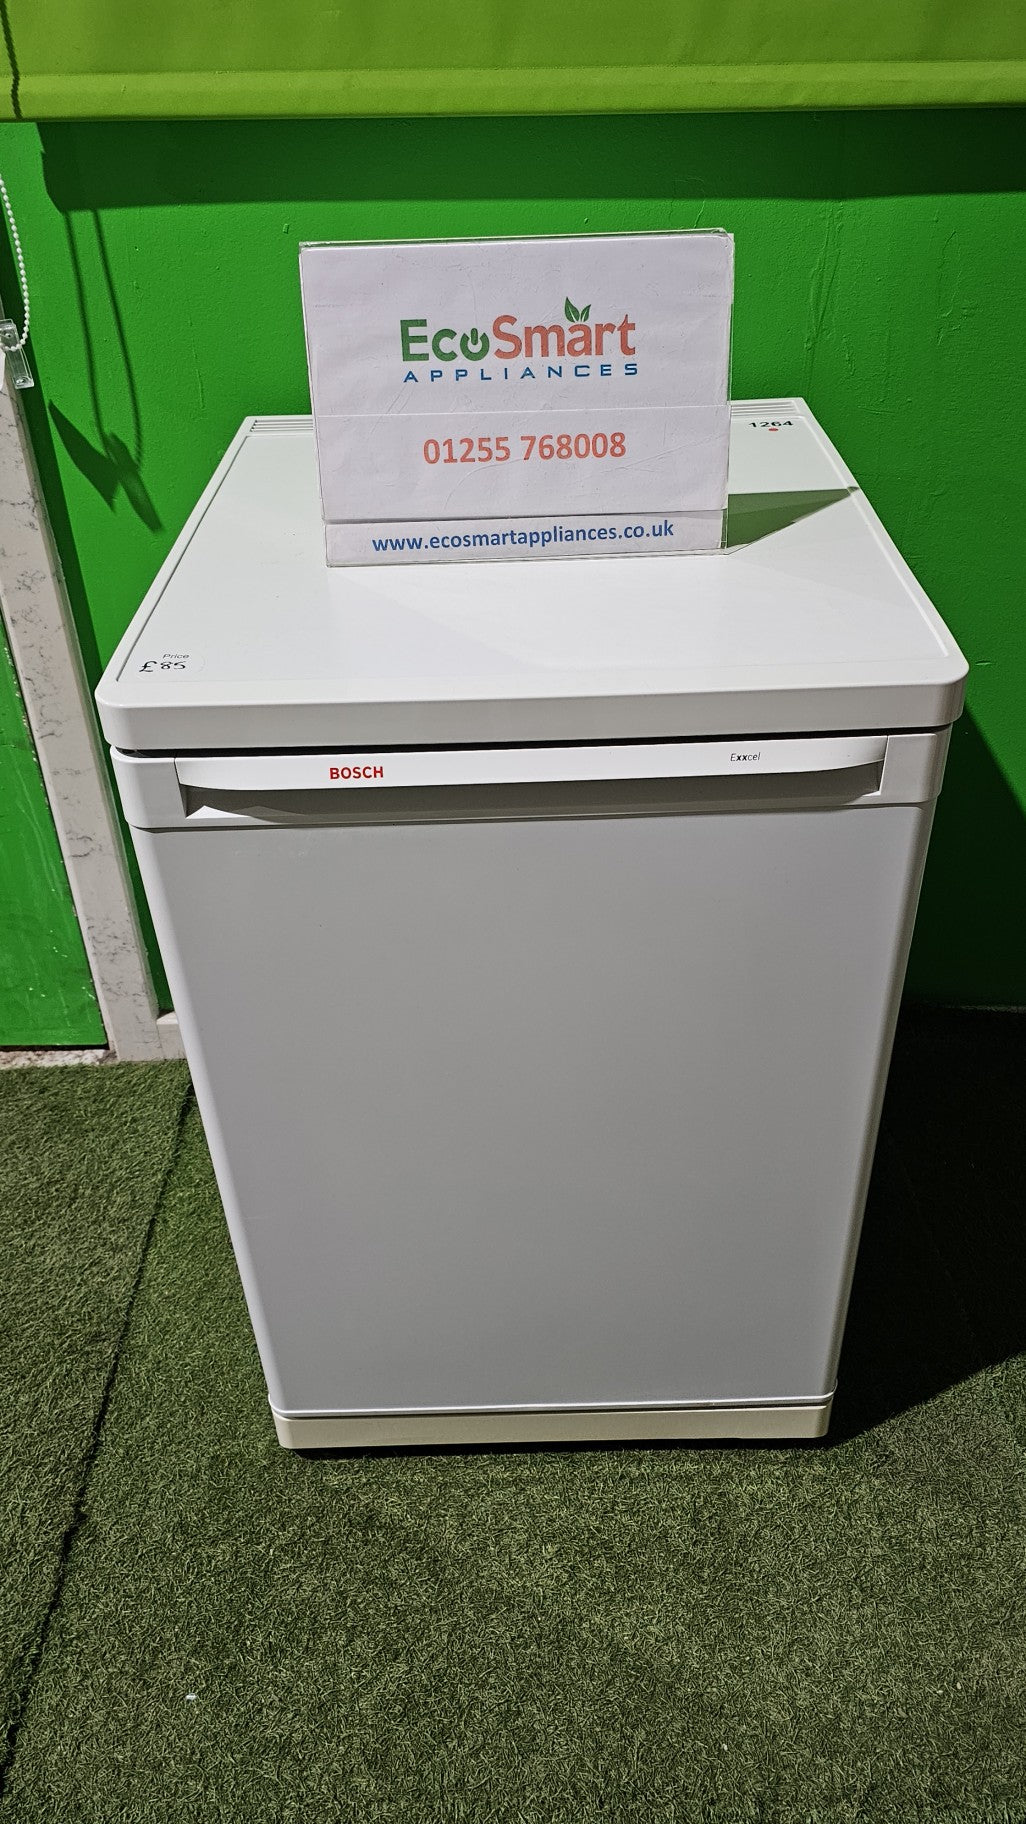 EcoSmart Appliances - Bosch Excell under counter fridge (1264)